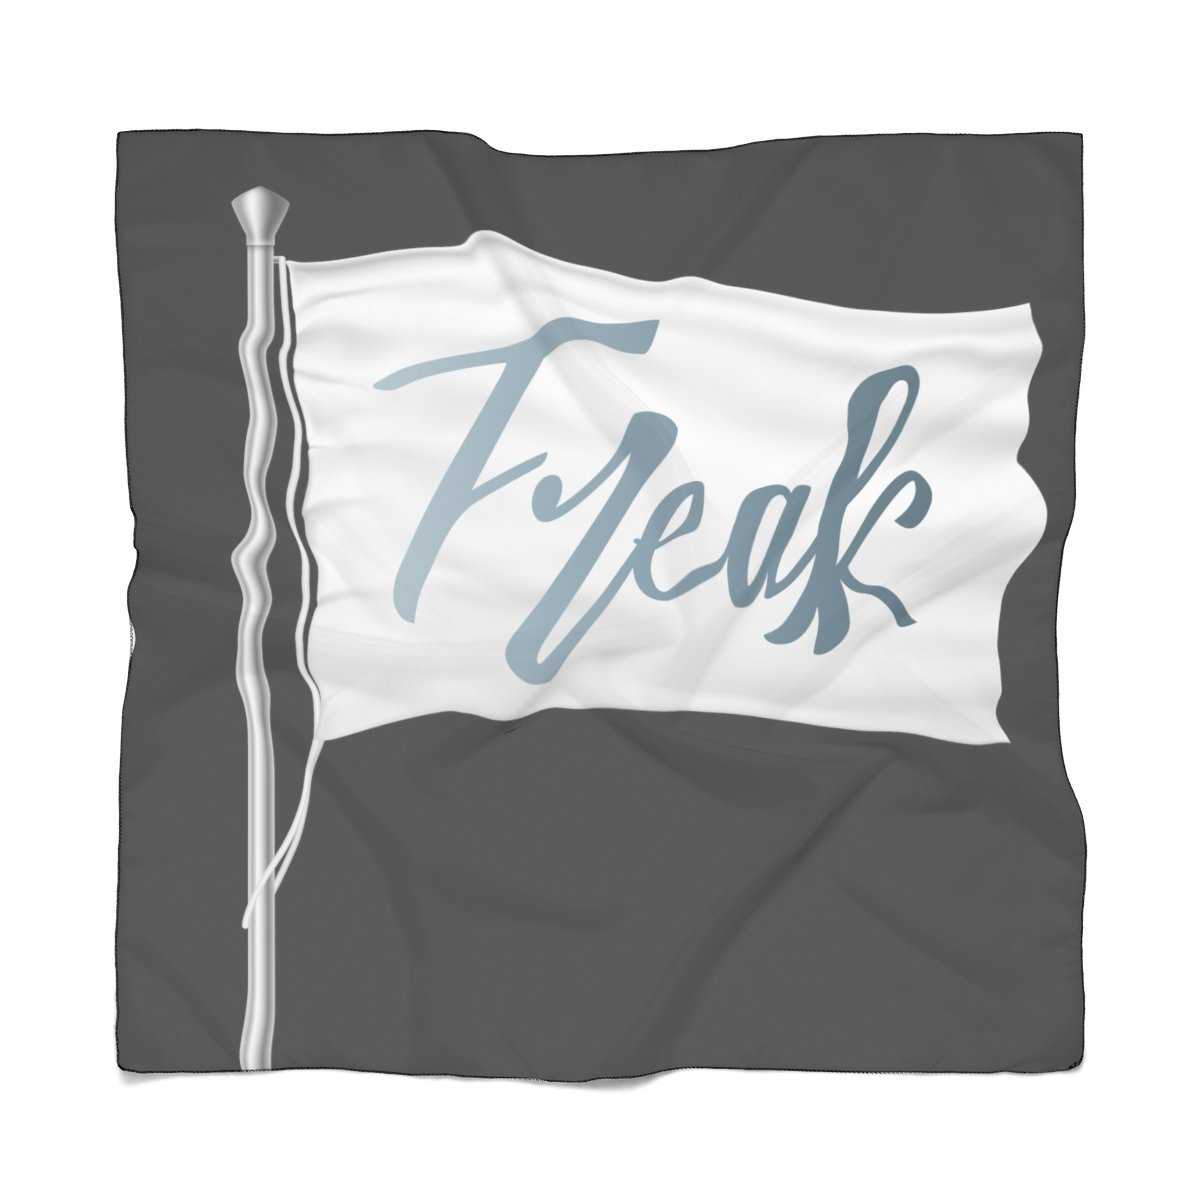 FREAK Flag Hankie in Monochrome - shopcontrabrands.com